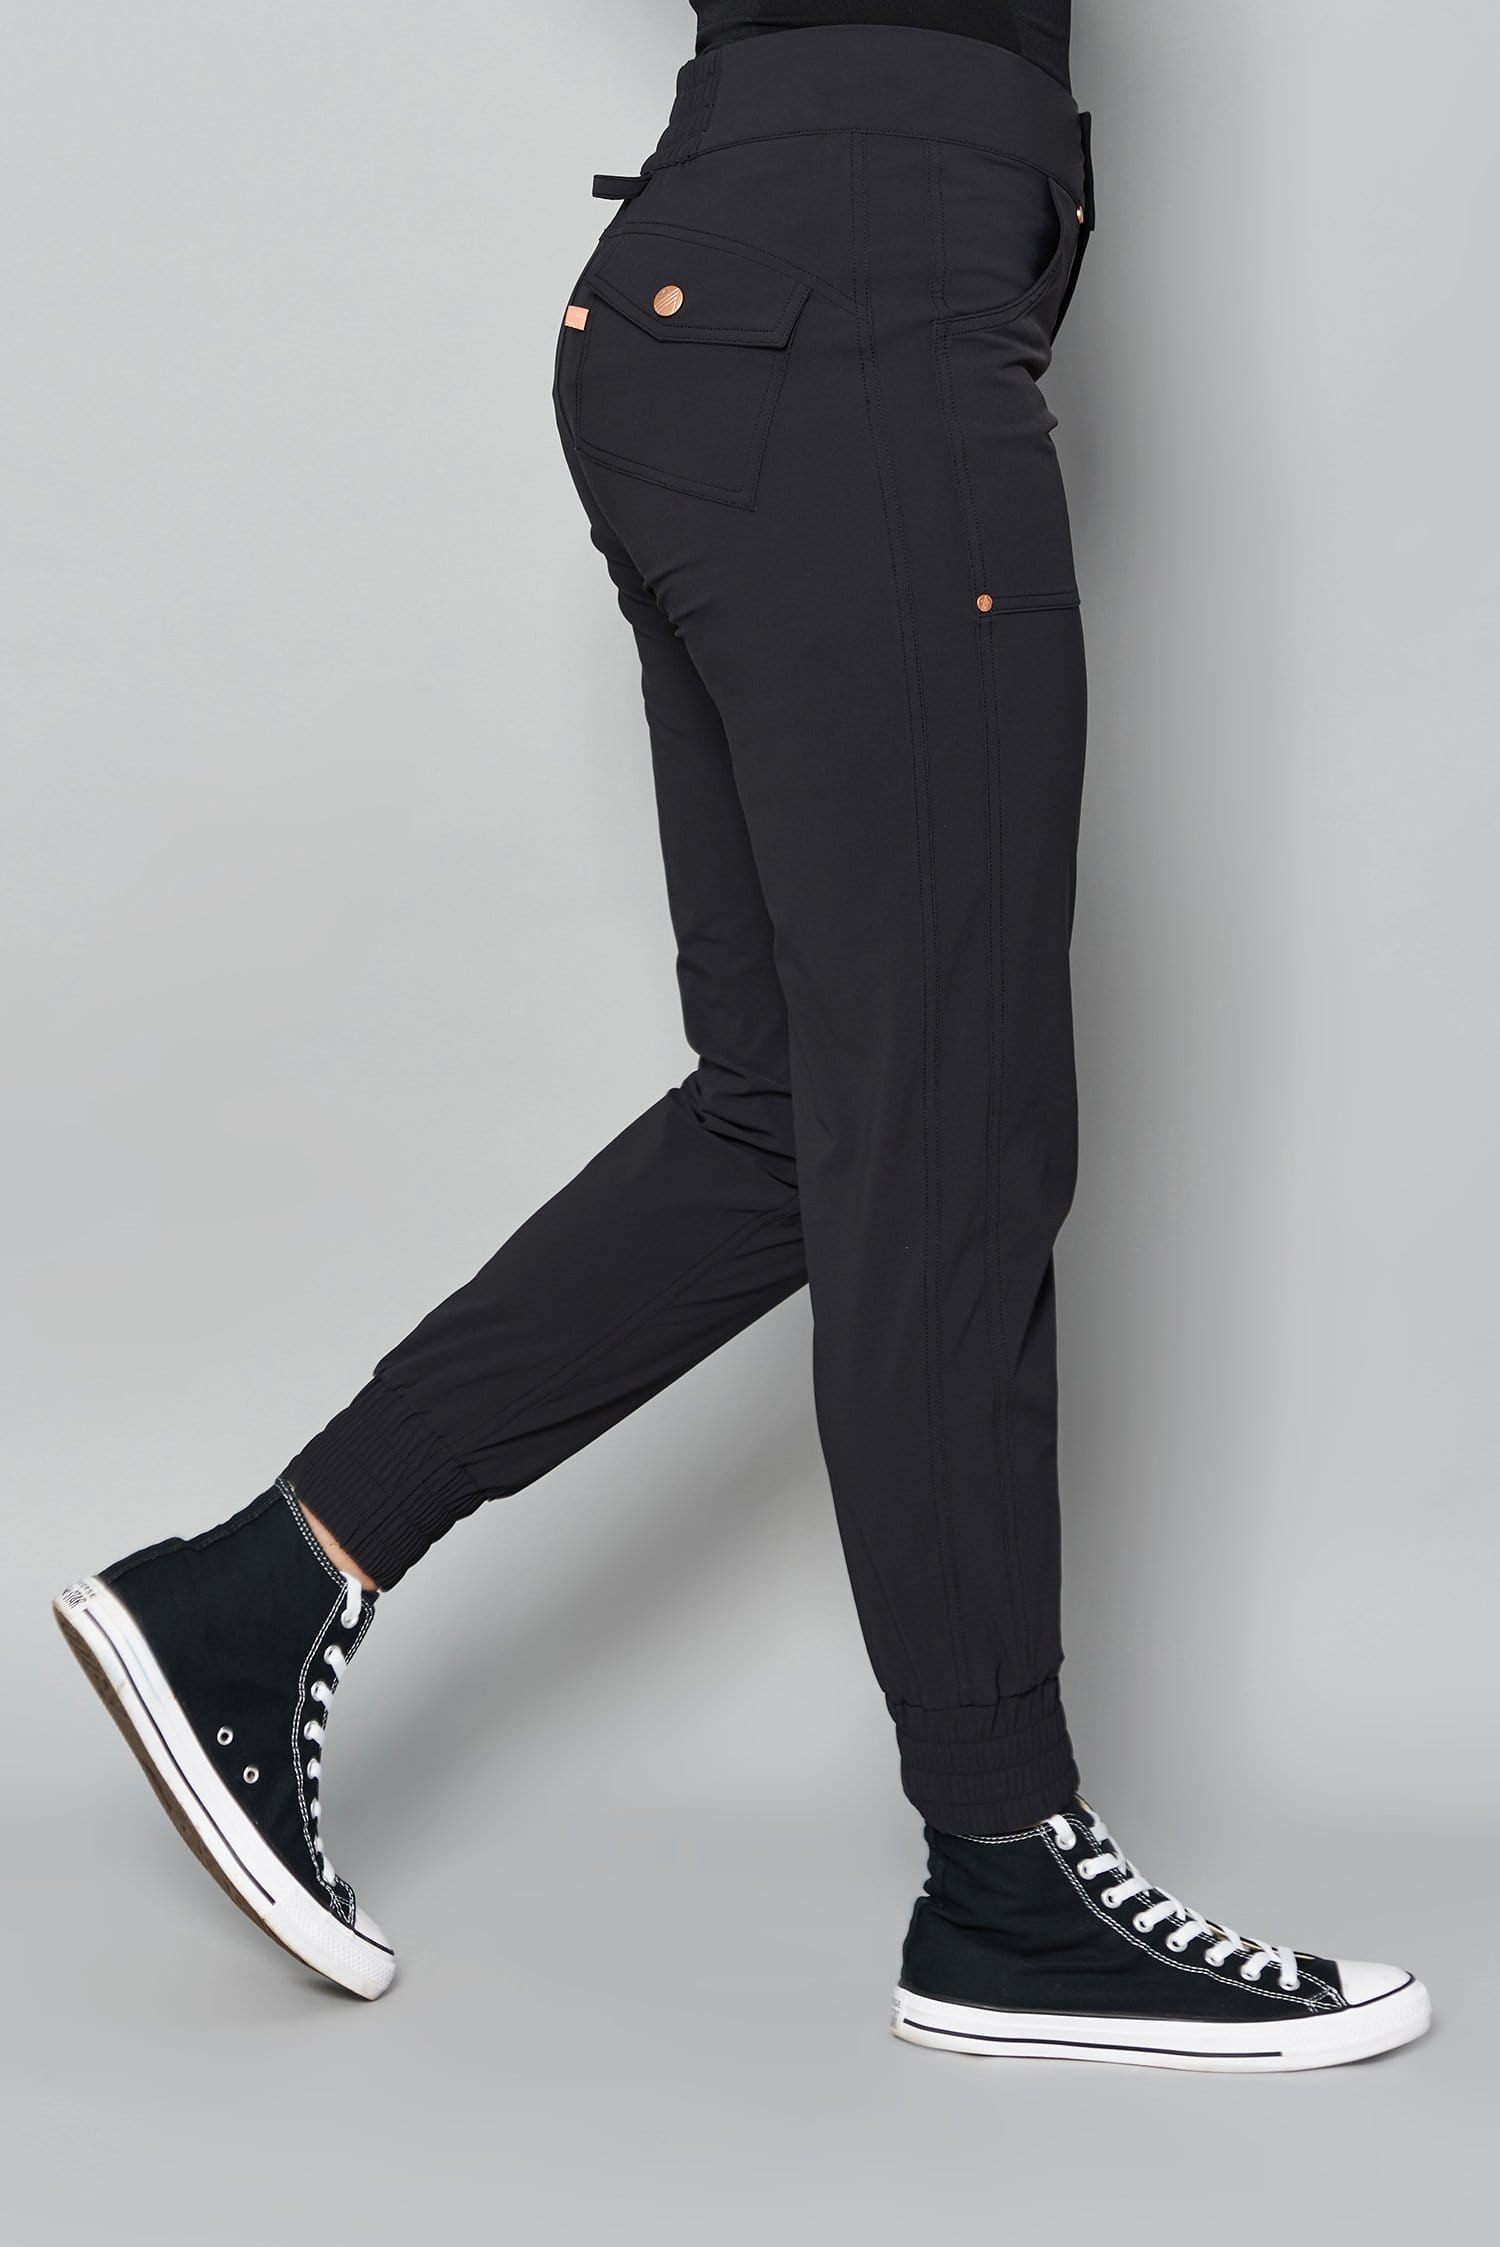 Casual Stroll Pants - Black - 28r / Uk10 - Womens - Acai Outdoorwear